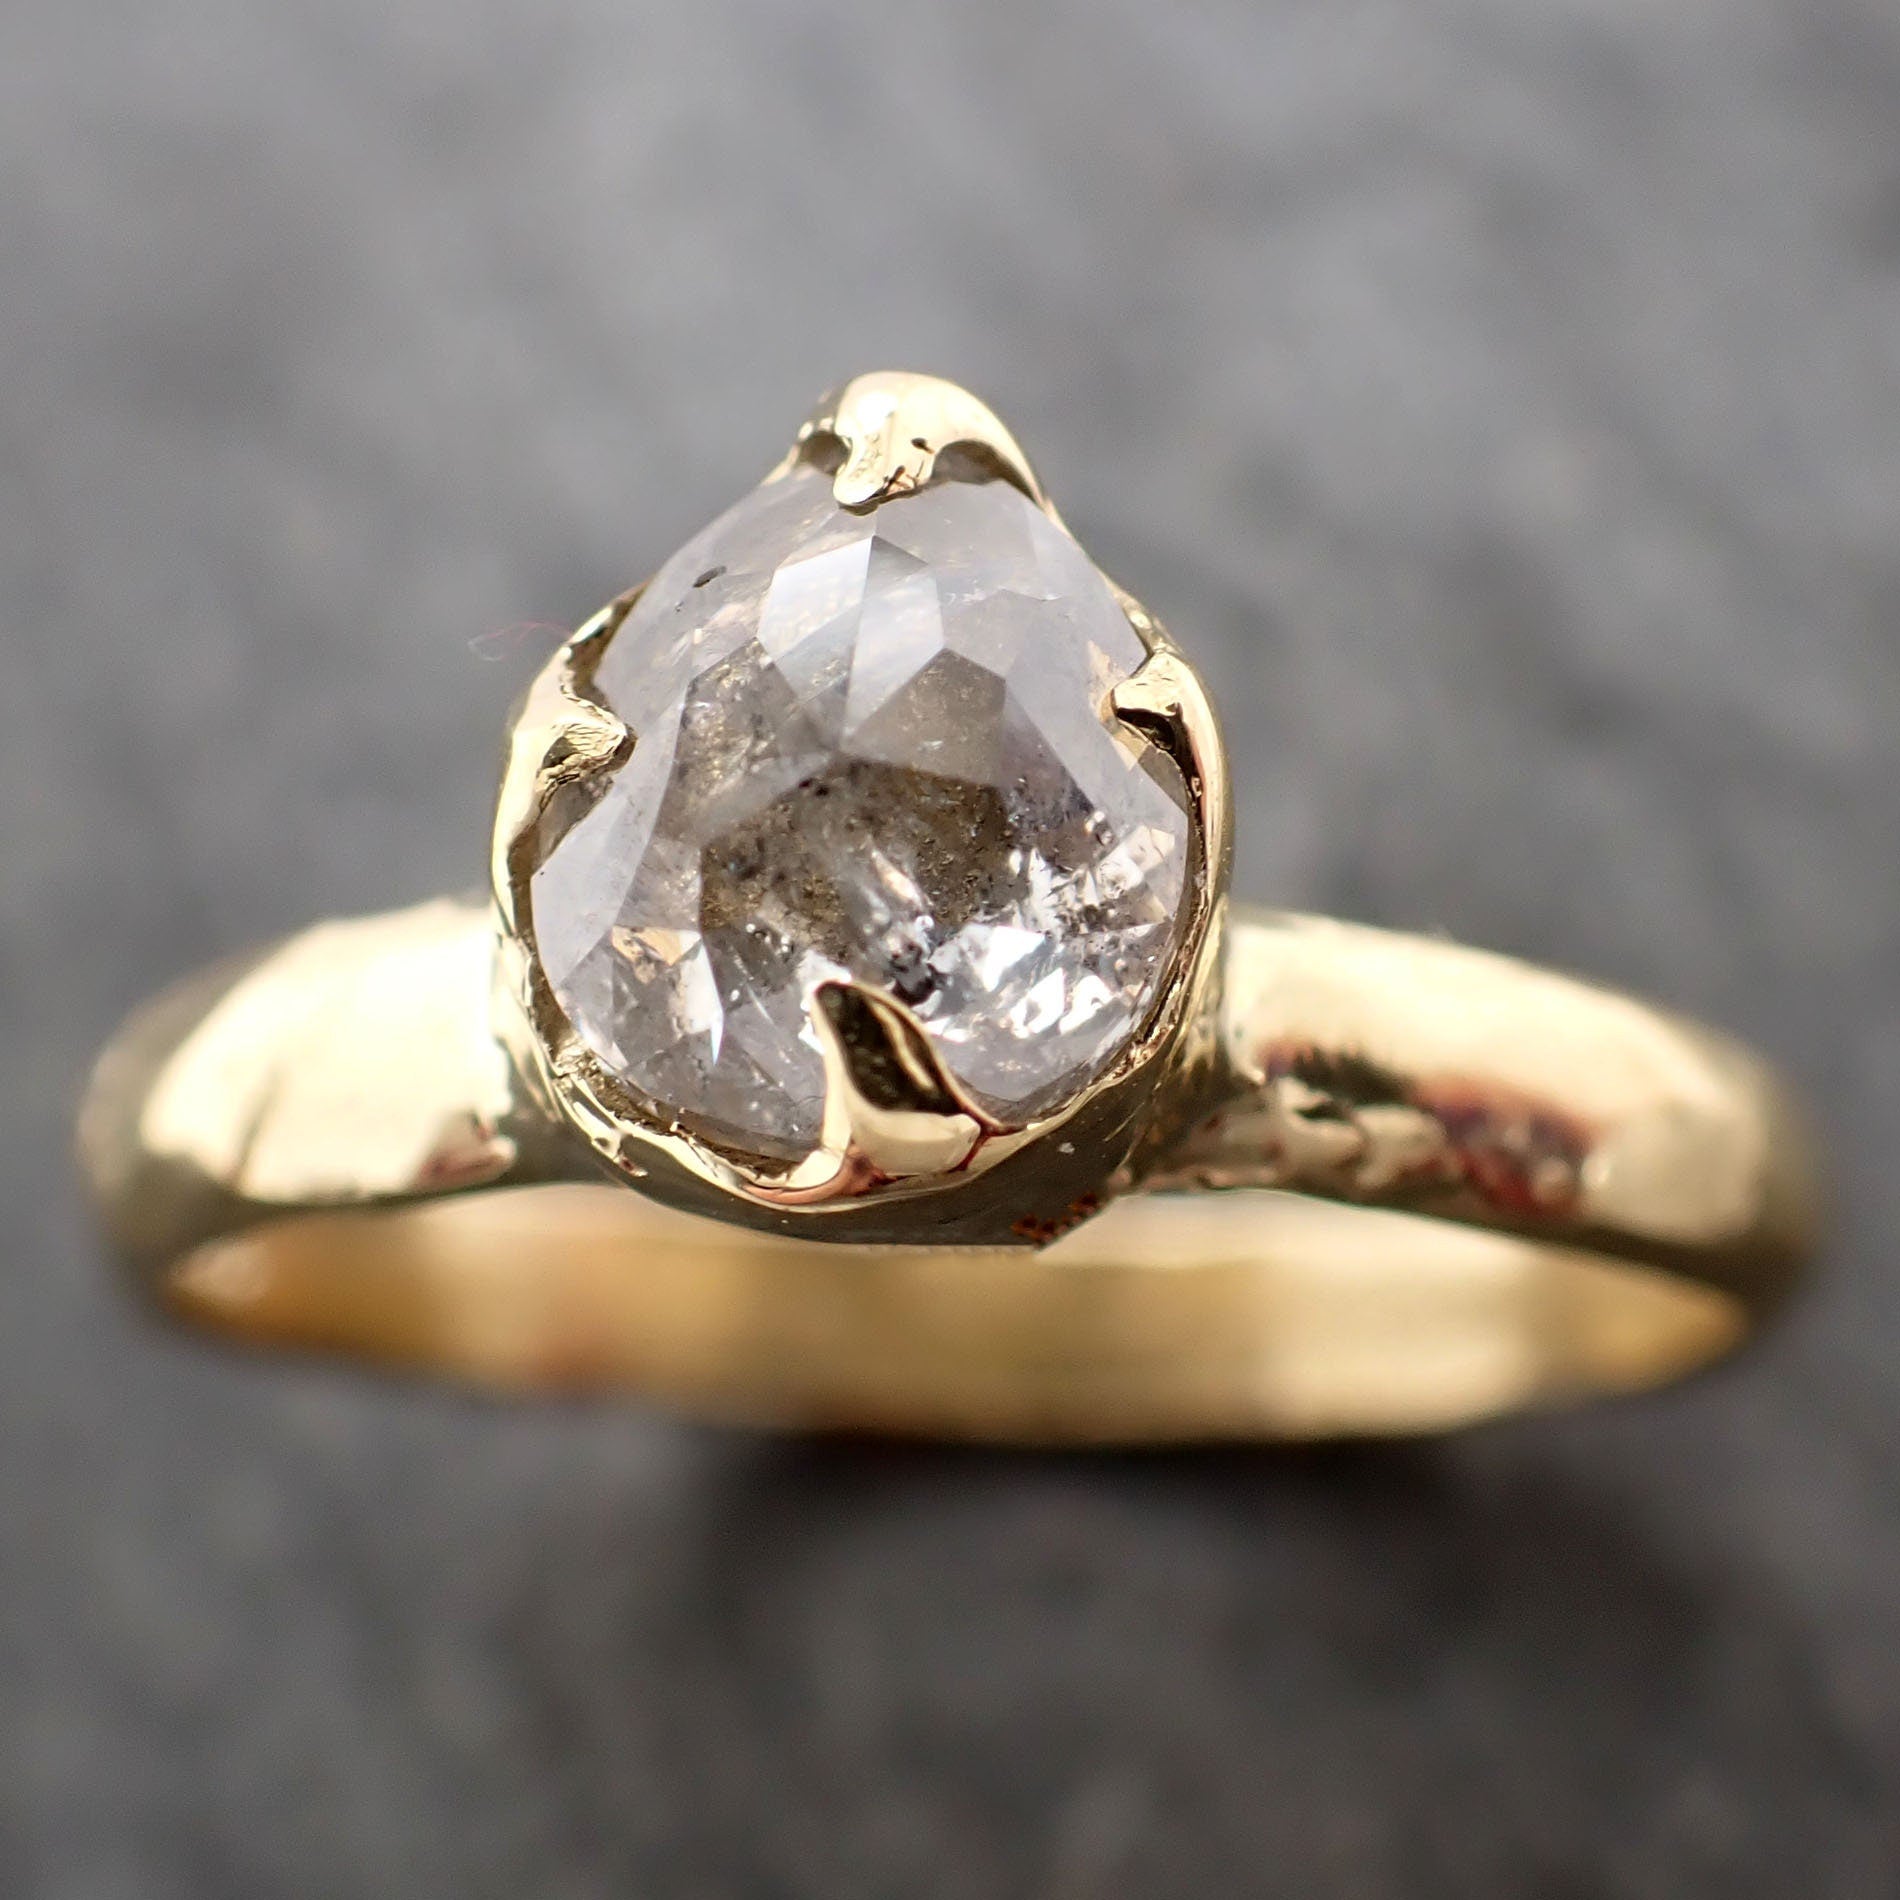 Fancy cut white Diamond Solitaire Engagement 18k yellow Gold Wedding Ring byAngeline 2916